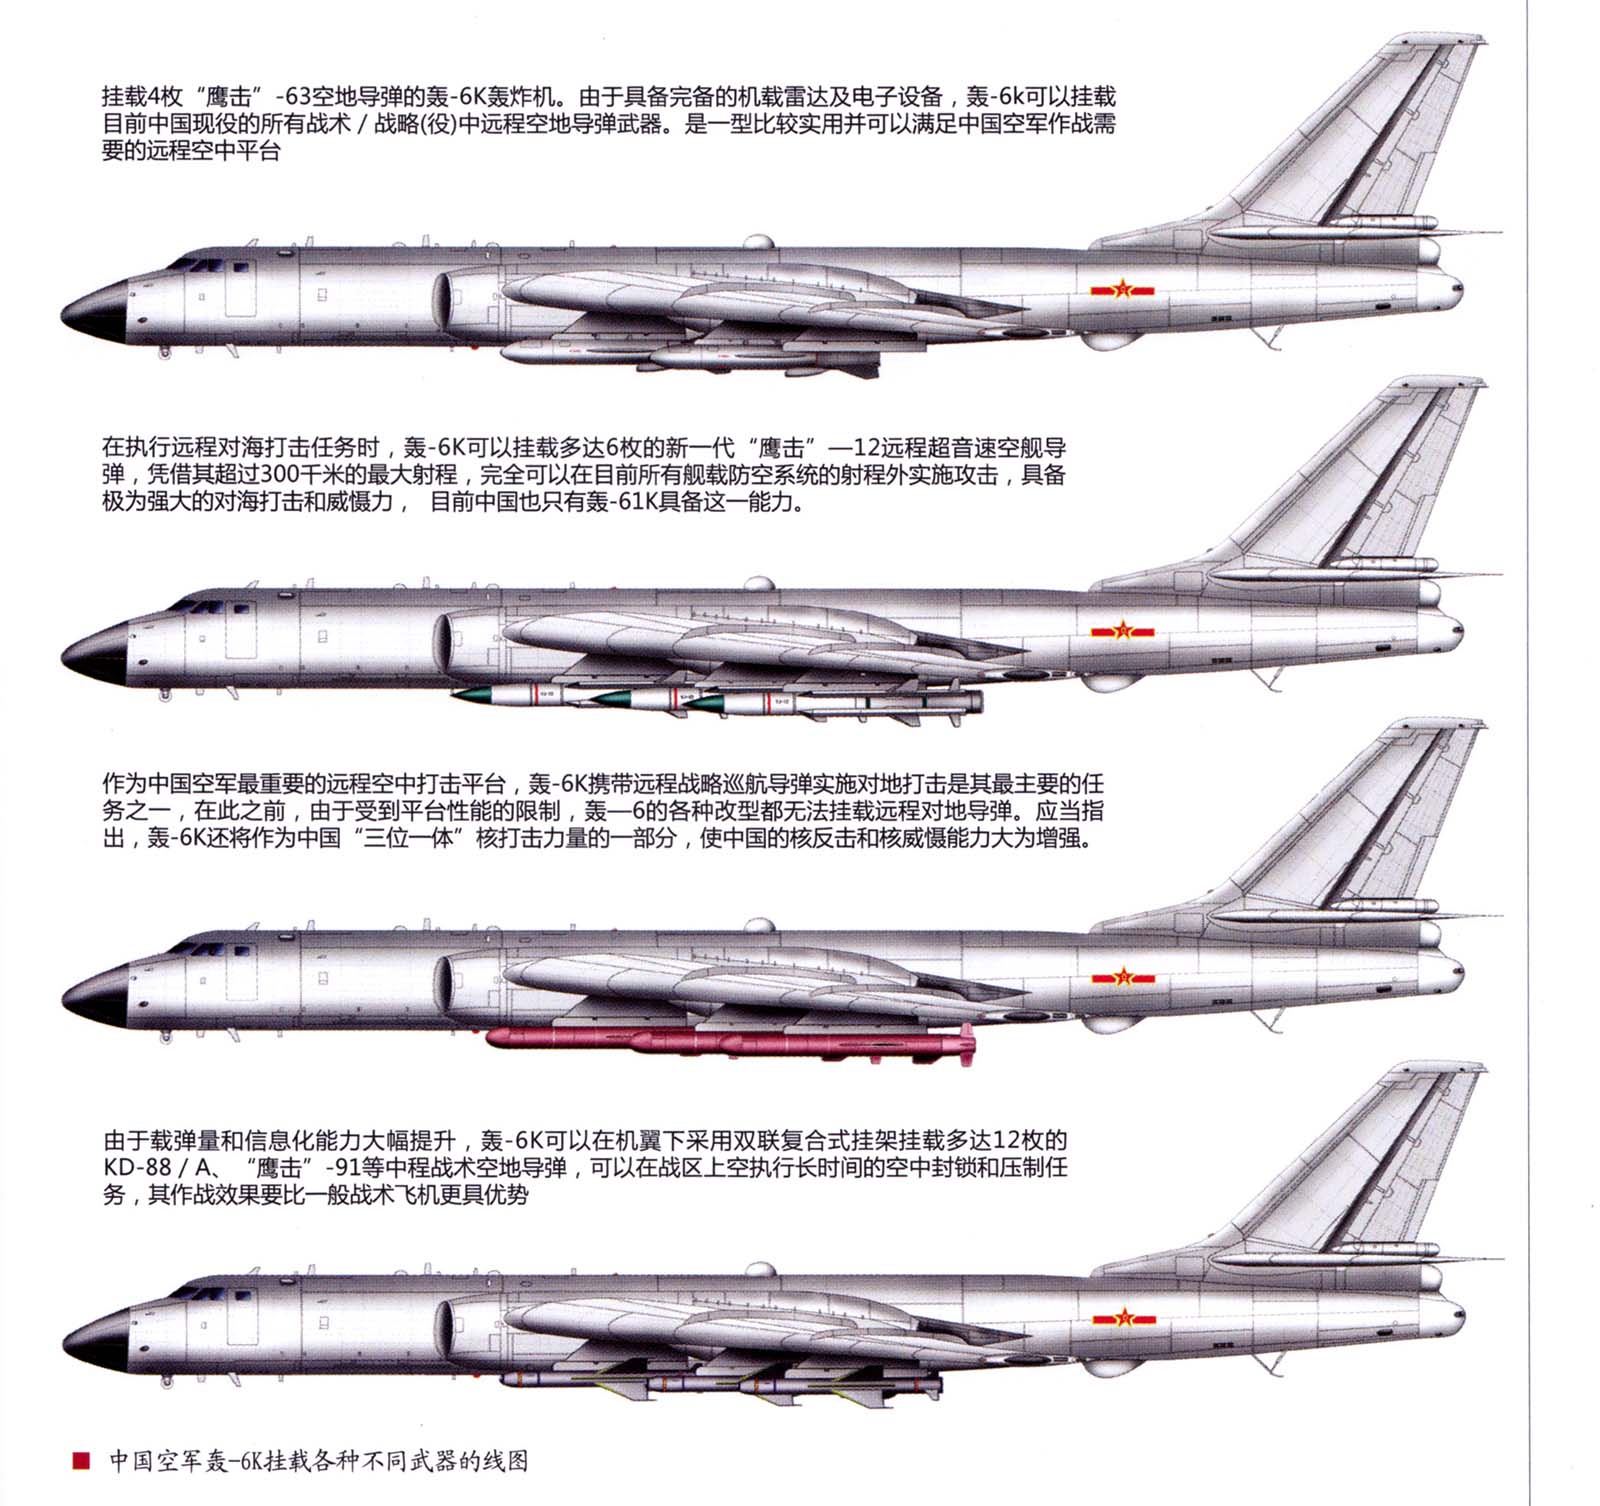 China ya tiene 15 bombarderos estratégicos capaces de atacar bases estadounidenses H-6K++6x+KD-63xian+H-6K+abcdefghkmu+Chinese+People's+Liberation+Army+Air+Force+Tupolev+Tu-16+Badger+antiship+missile+pgm+ls-6+lt-2+3+(1)